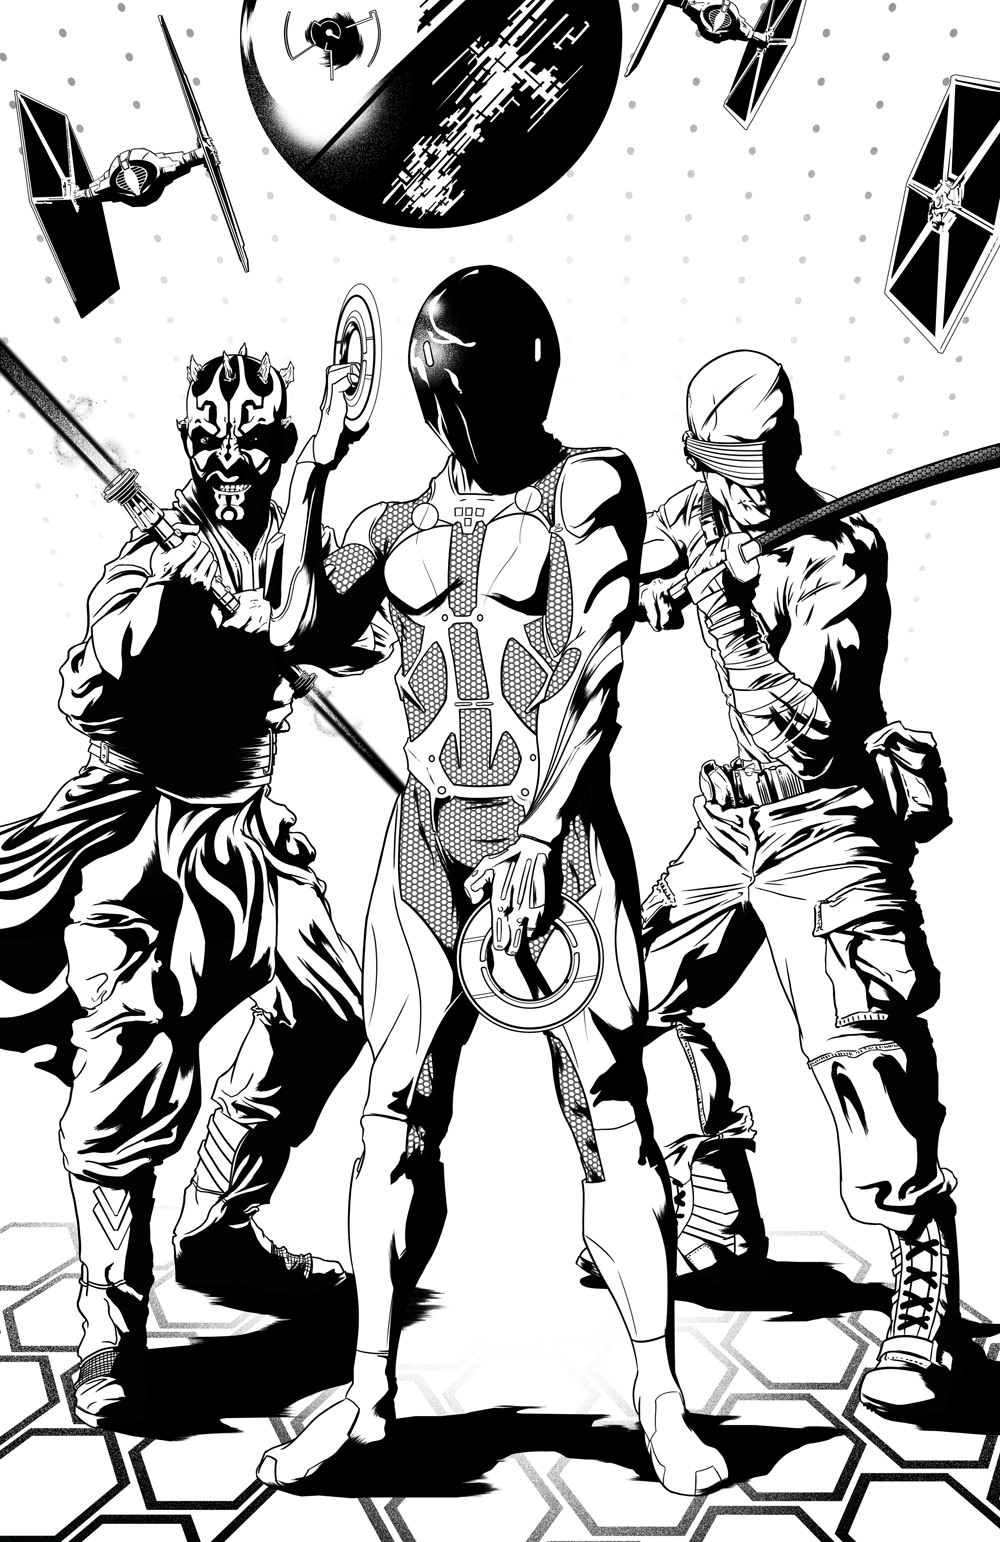 wacom photoshop comic comics comicbook ninja star wars G.I. Joe Tron Rinzler Snake Eyes Darth Maul